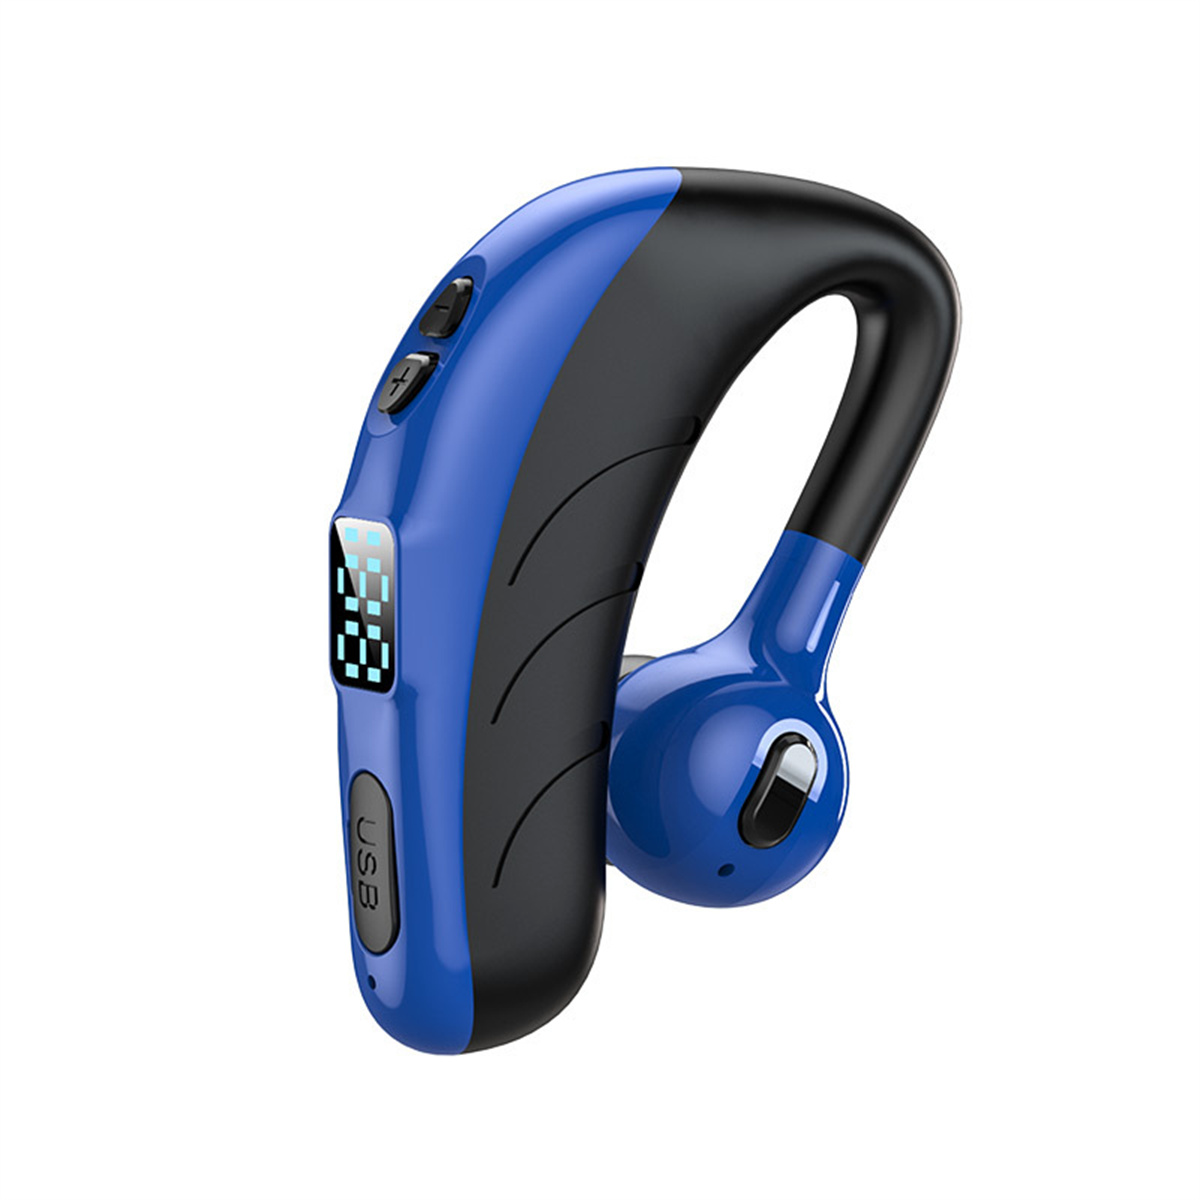 ENBAOXIN Gelbes On-Ear-Bluetooth-Headset - Kopfhörer On-ear Standby-Zeit, Bluetooth intelligente Gelb lange Bluetooth Geräuschunterdrückung, Ultra